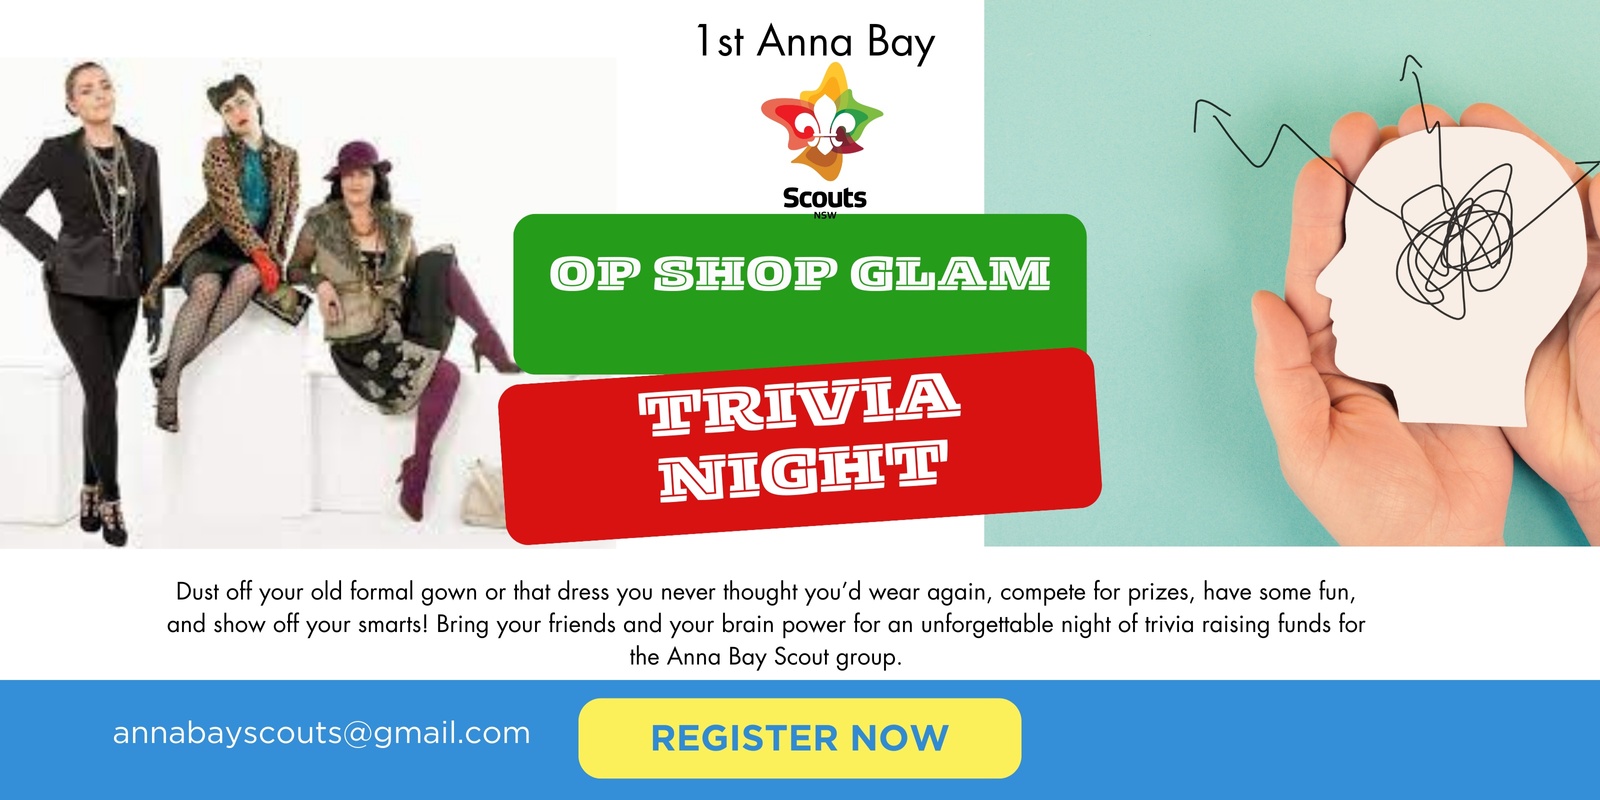 Anna Bay Scouts Op Shop Glam Trivia Night | Humanitix